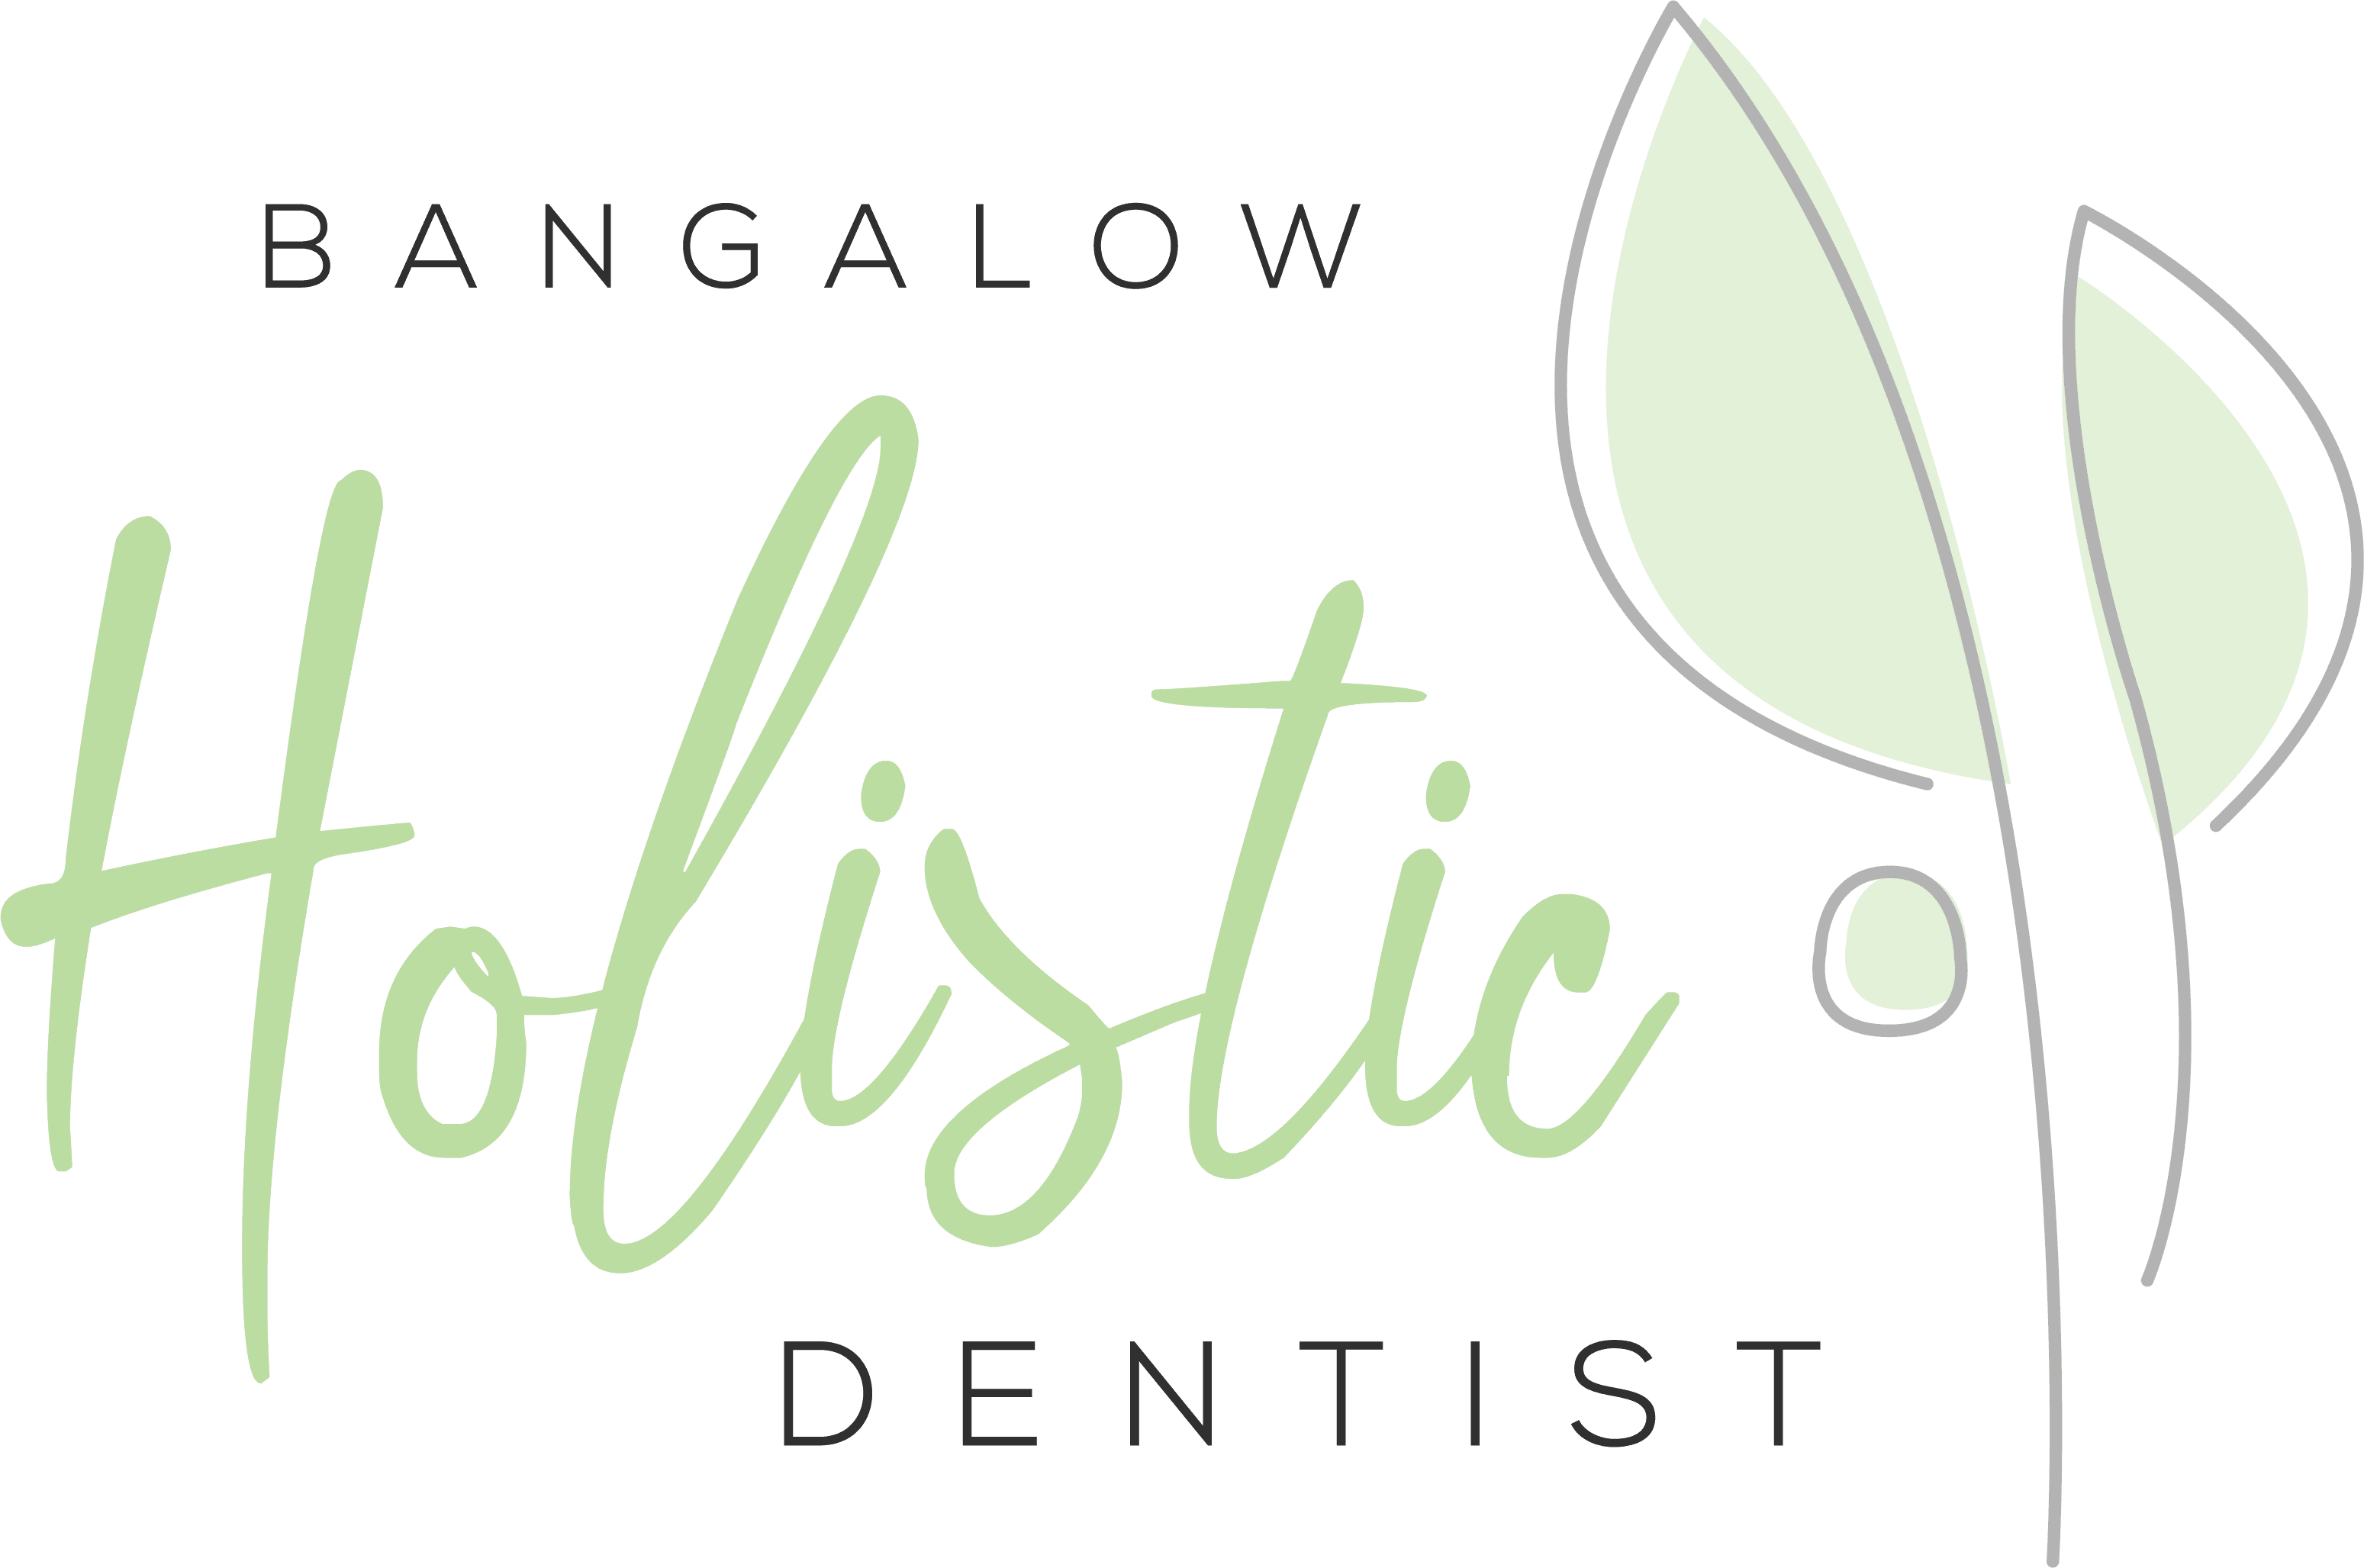 Bangalow Holistic Dentist, Branding, Website design Bangalow - c55 creative